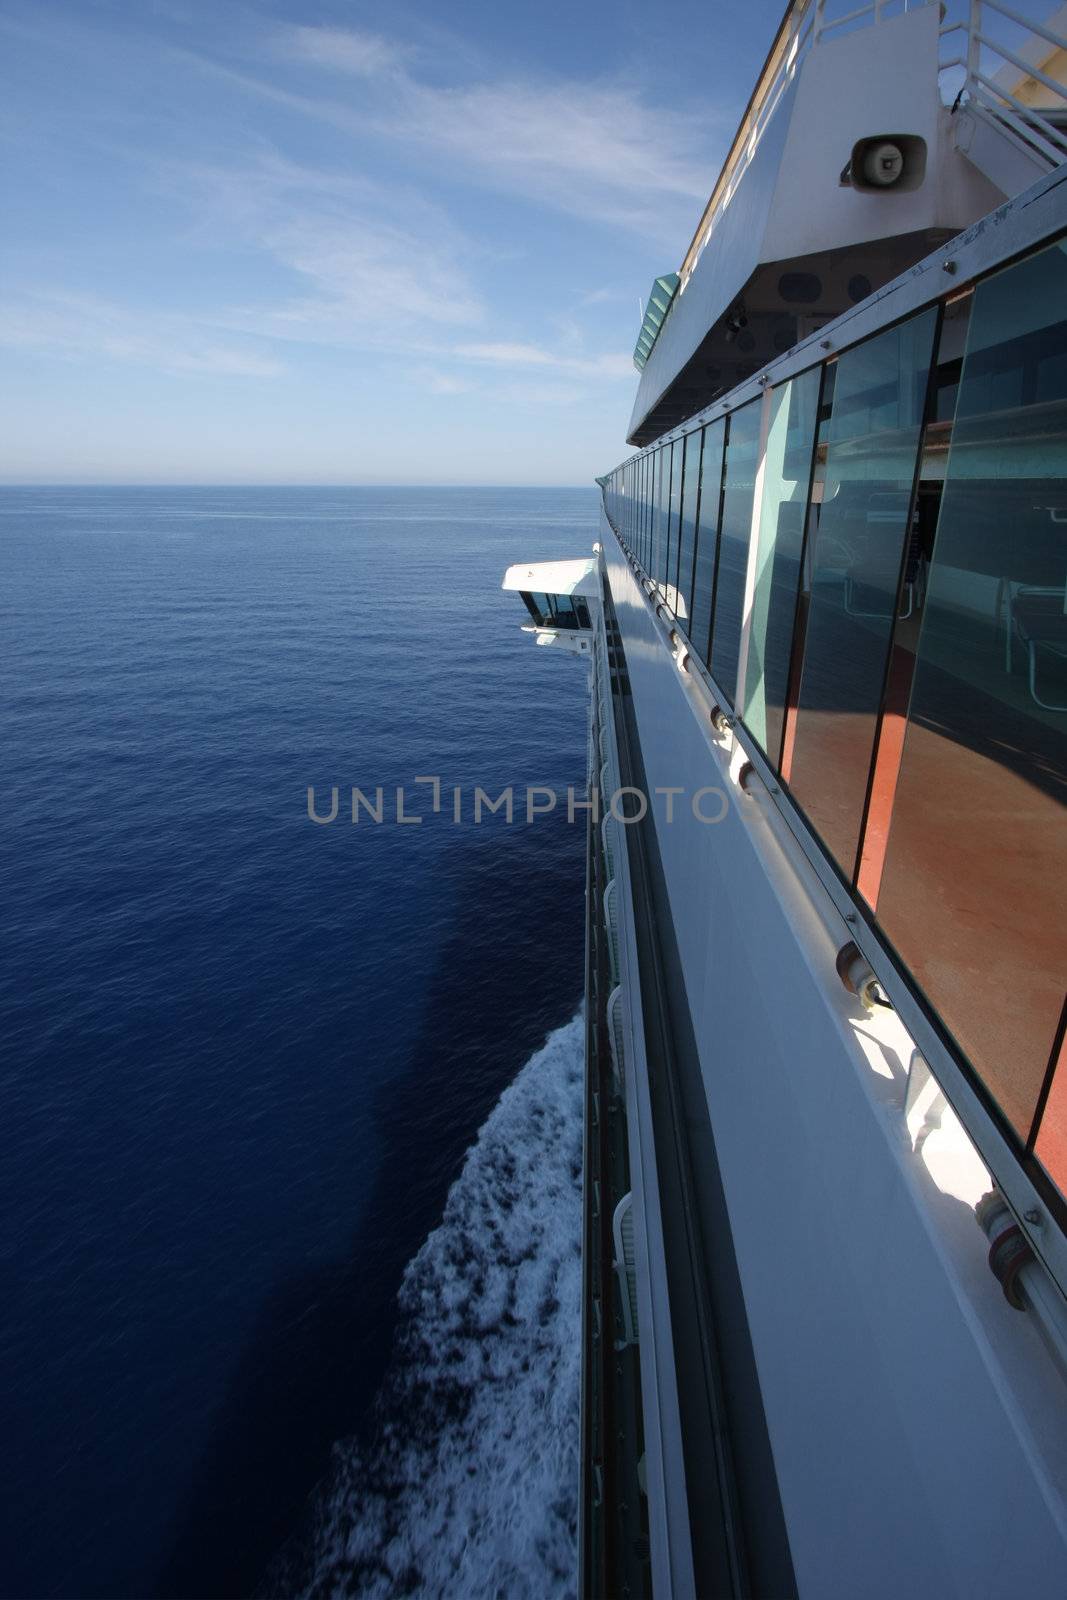 Beautiful view from the cruiseship